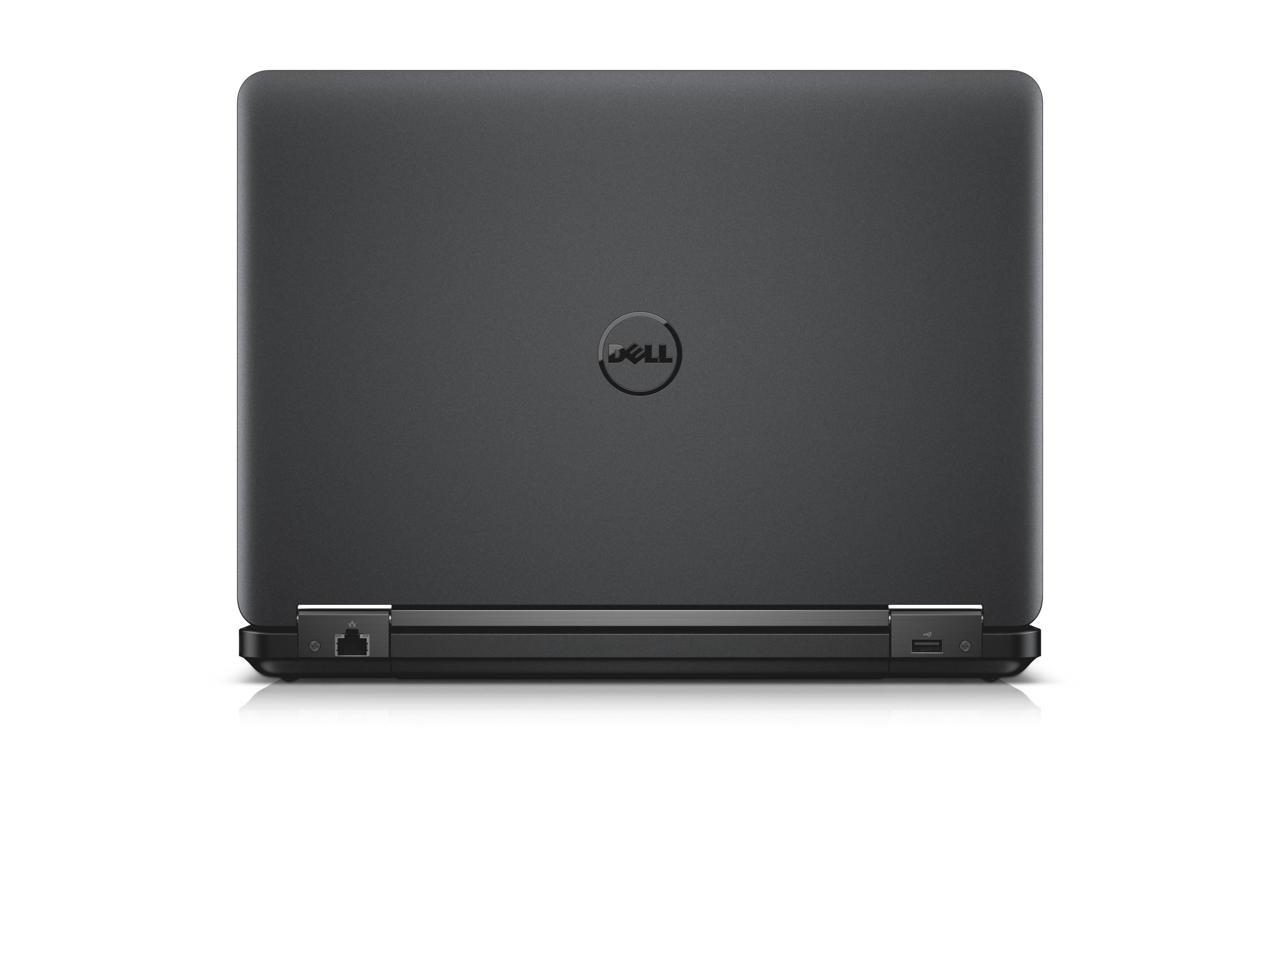 Refurbished Dell Latitude E5440 Laptop Computer Intel Core i5 Processor, 8GB Ram, 500GB Hard Drive, Windows 11 Operating System